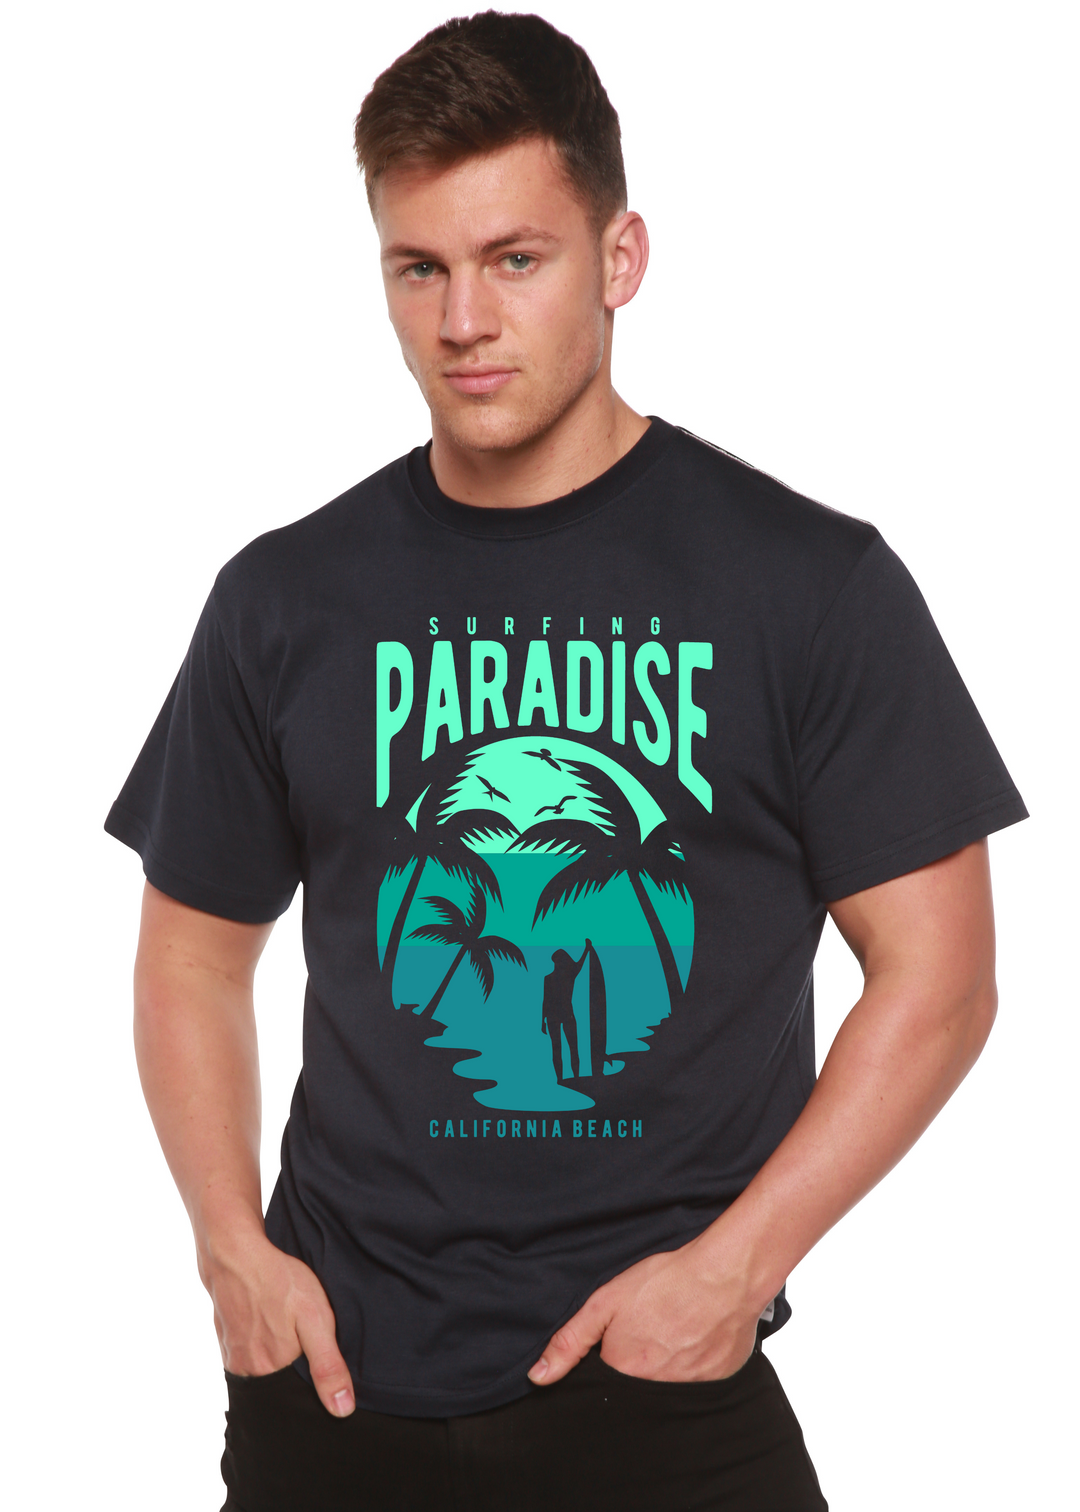 Surfing Paradise California men's bamboo tshirt navy blue